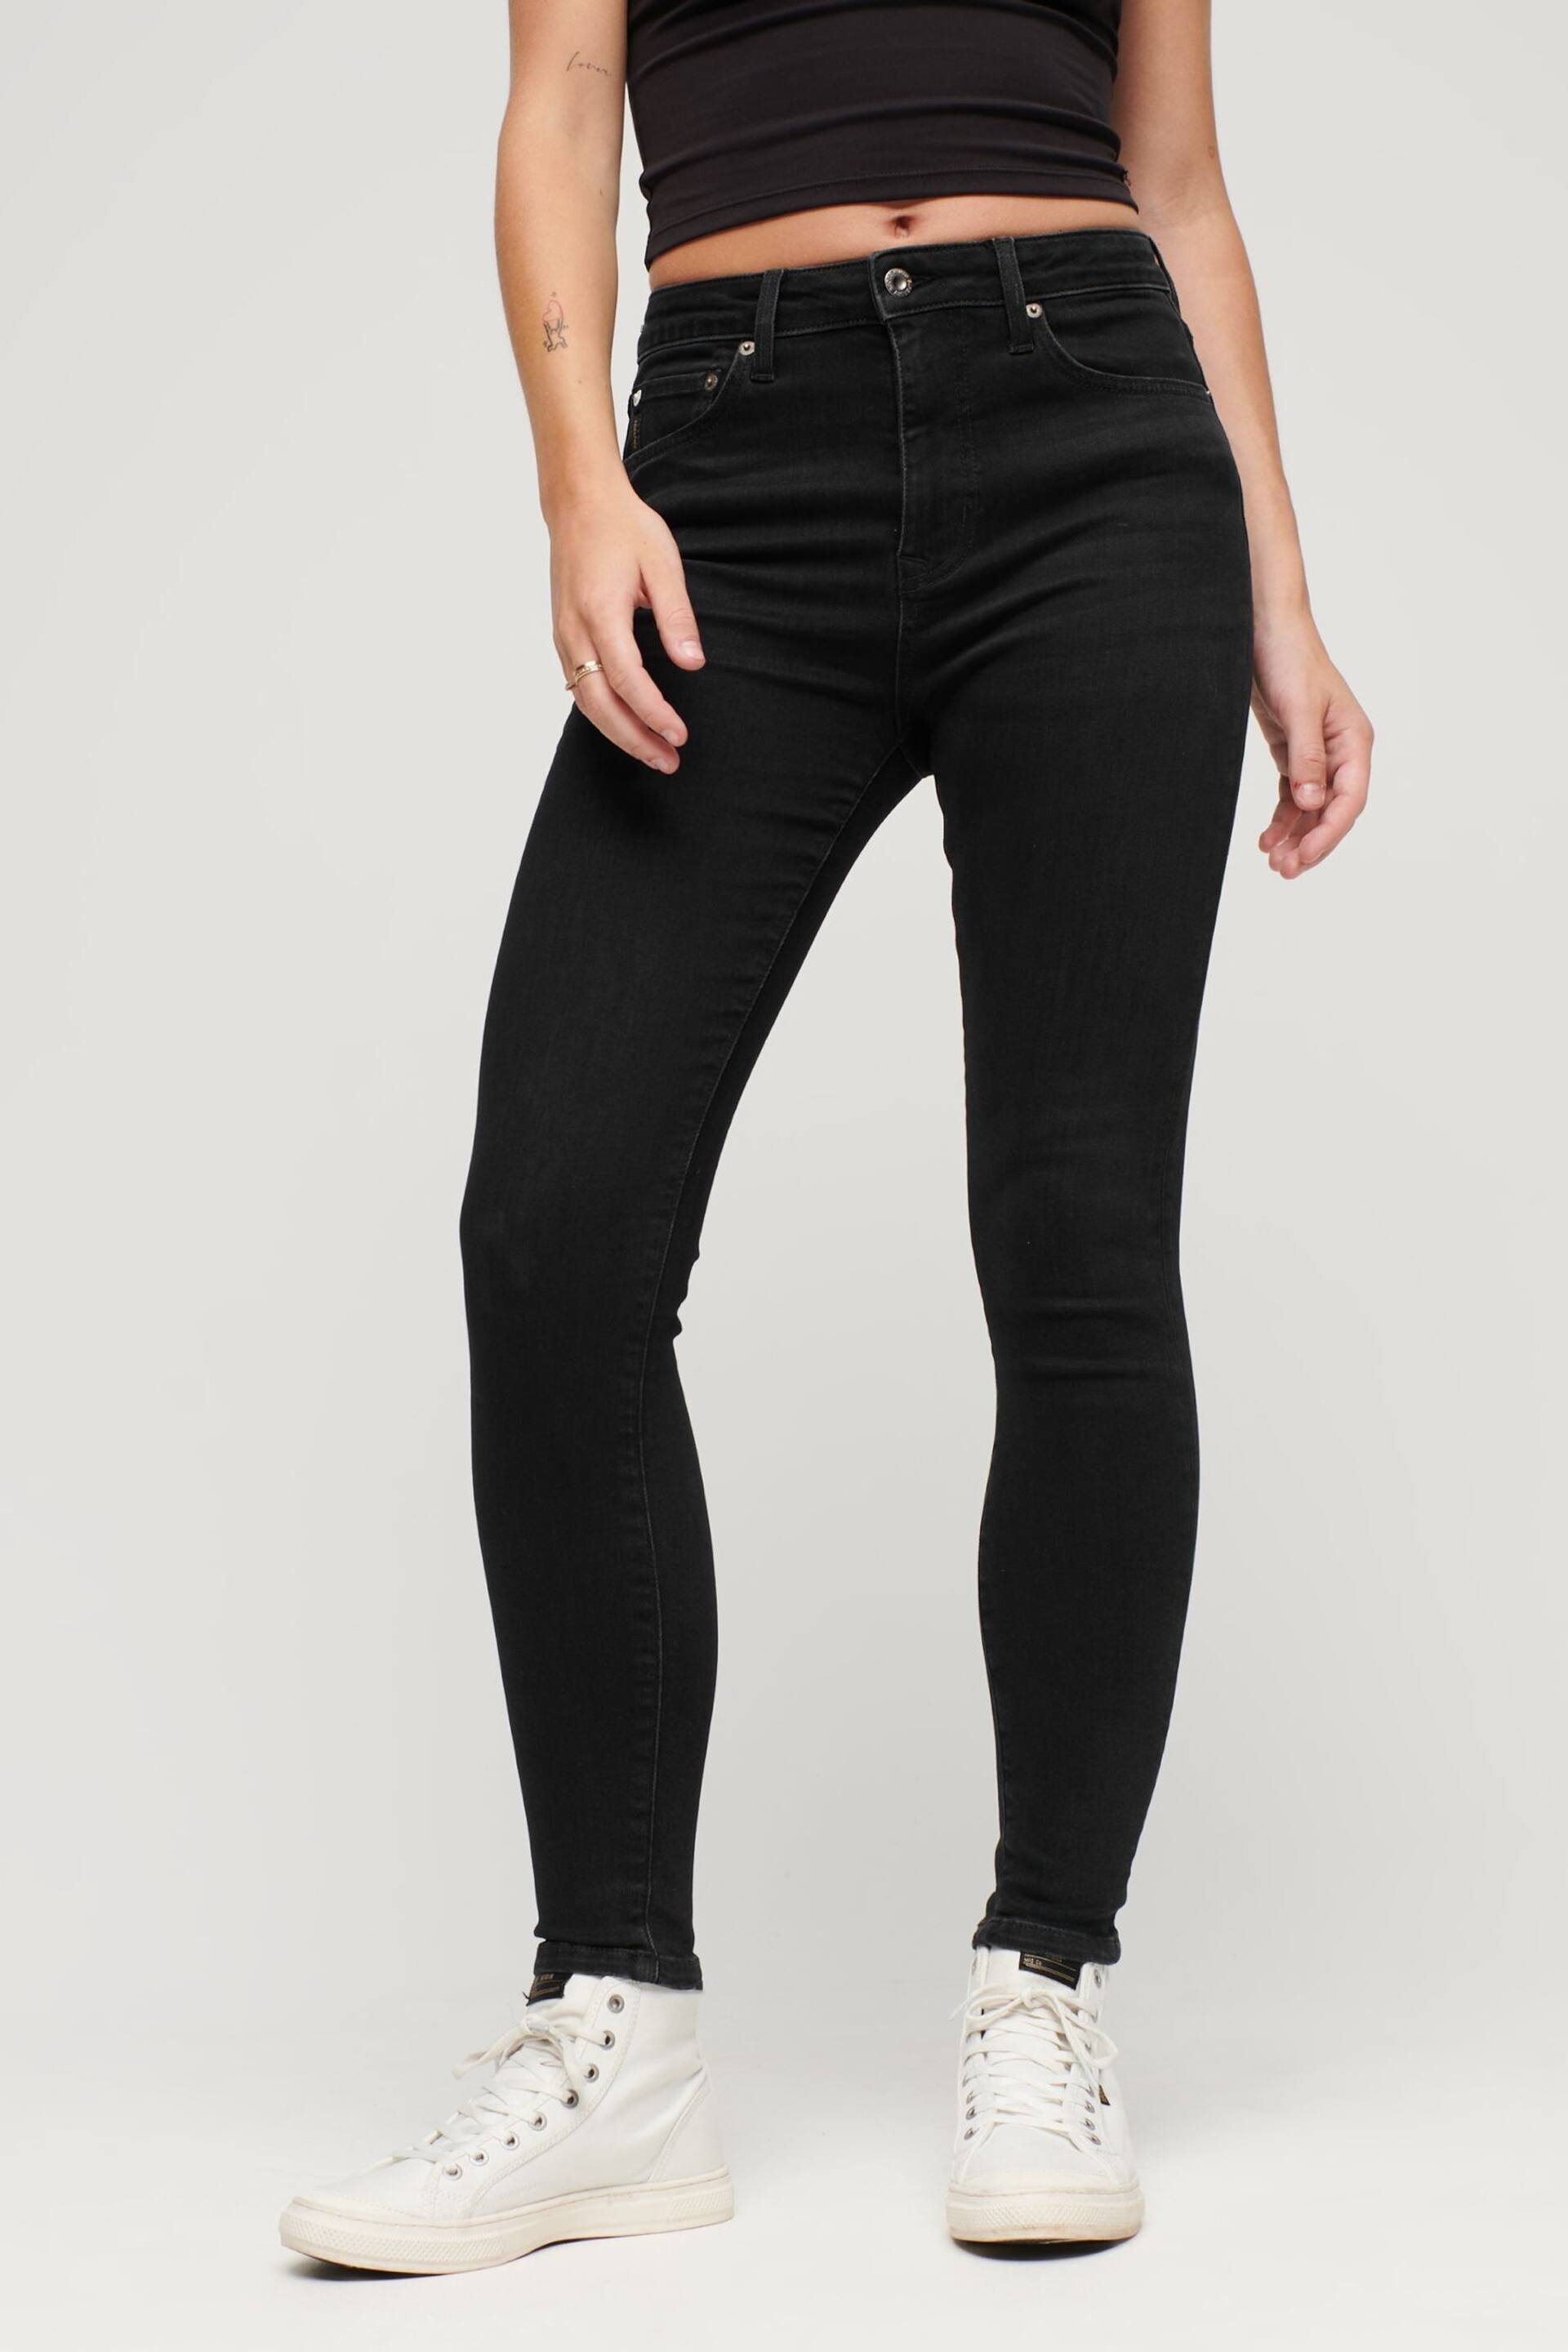 Superdry Dark Black Cotton Vintage Low Rise Slim Flare Jeans - Image 1 of 3